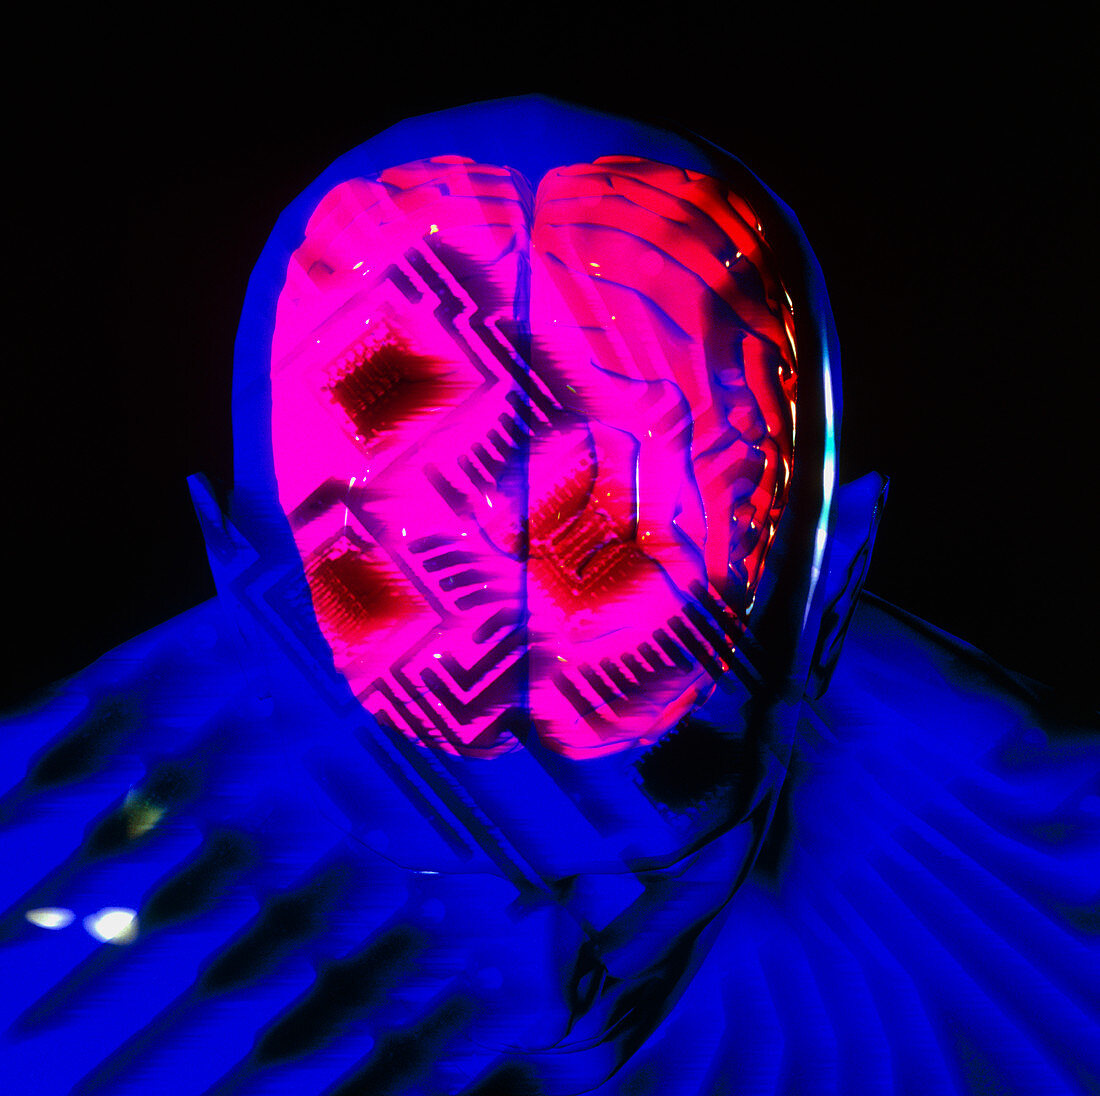 Computer artwork of human brain with microcircuits